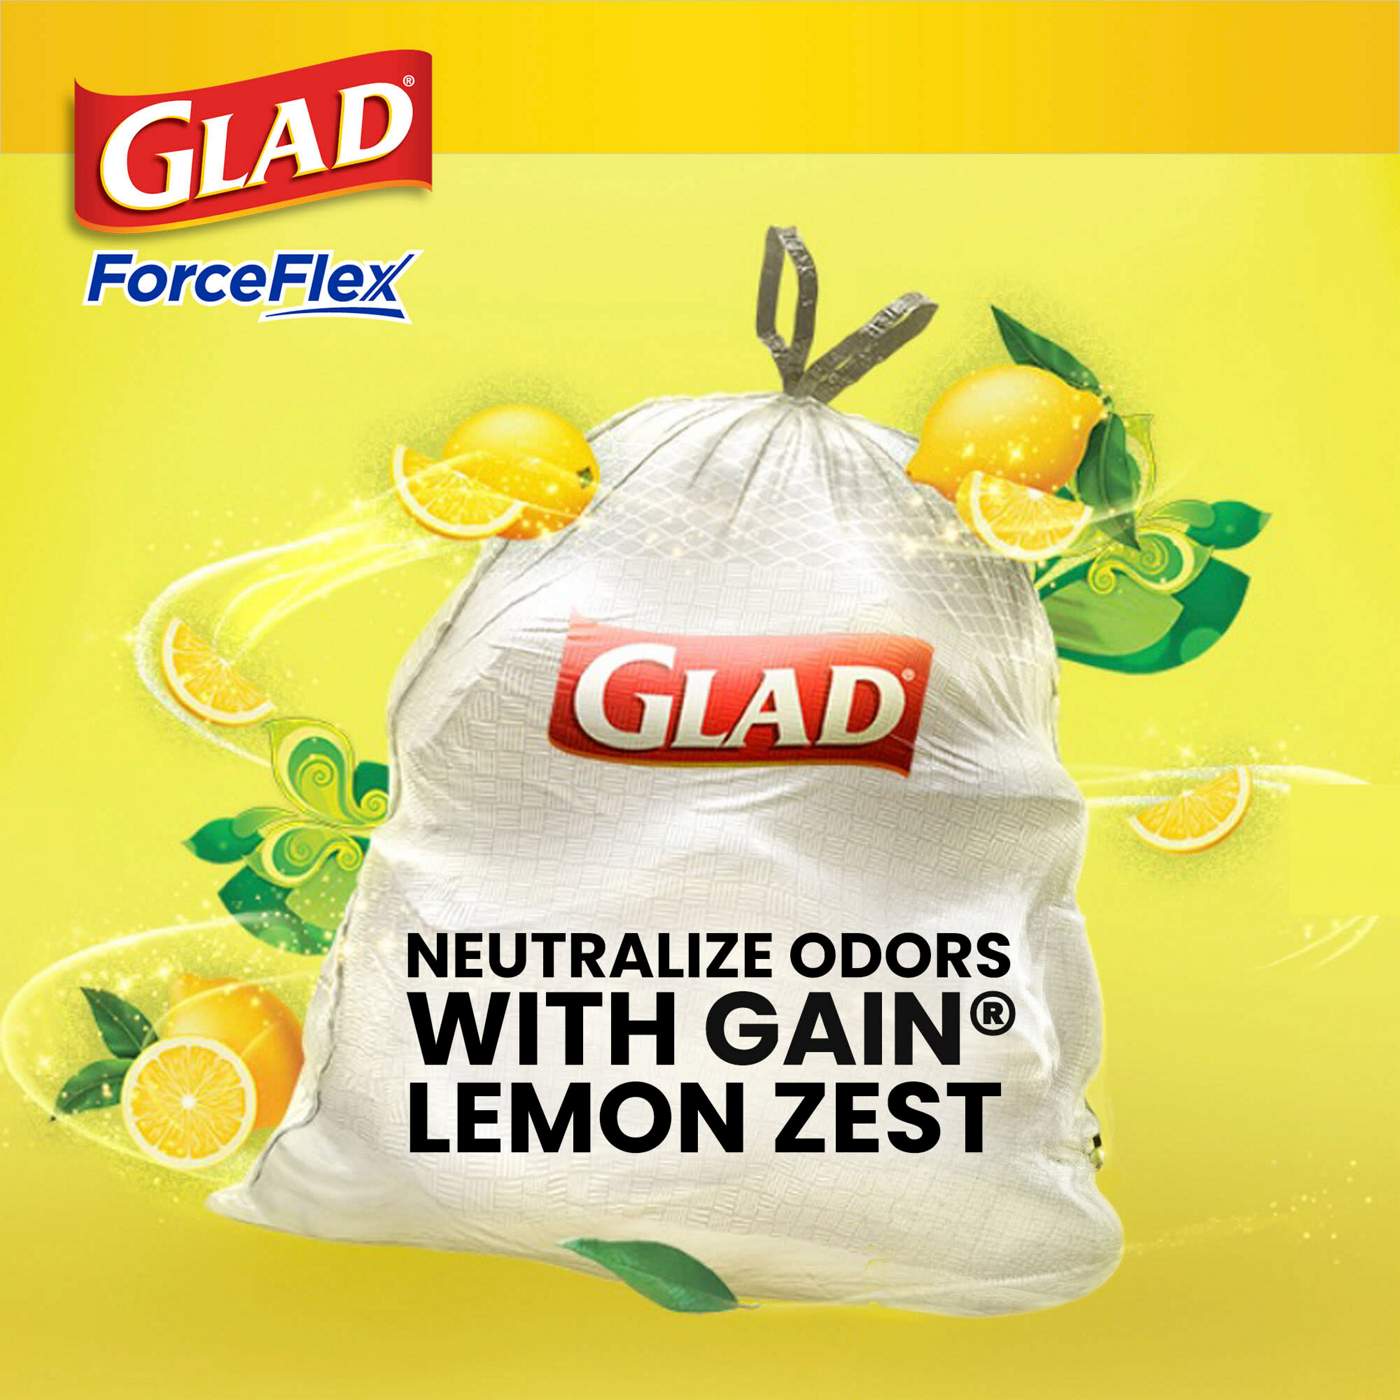 Glad ForceFlex Tall Kitchen Drawstring Trash Bags, 13 Gallon - Gain Lemon Zest with Febreze Freshness; image 9 of 10